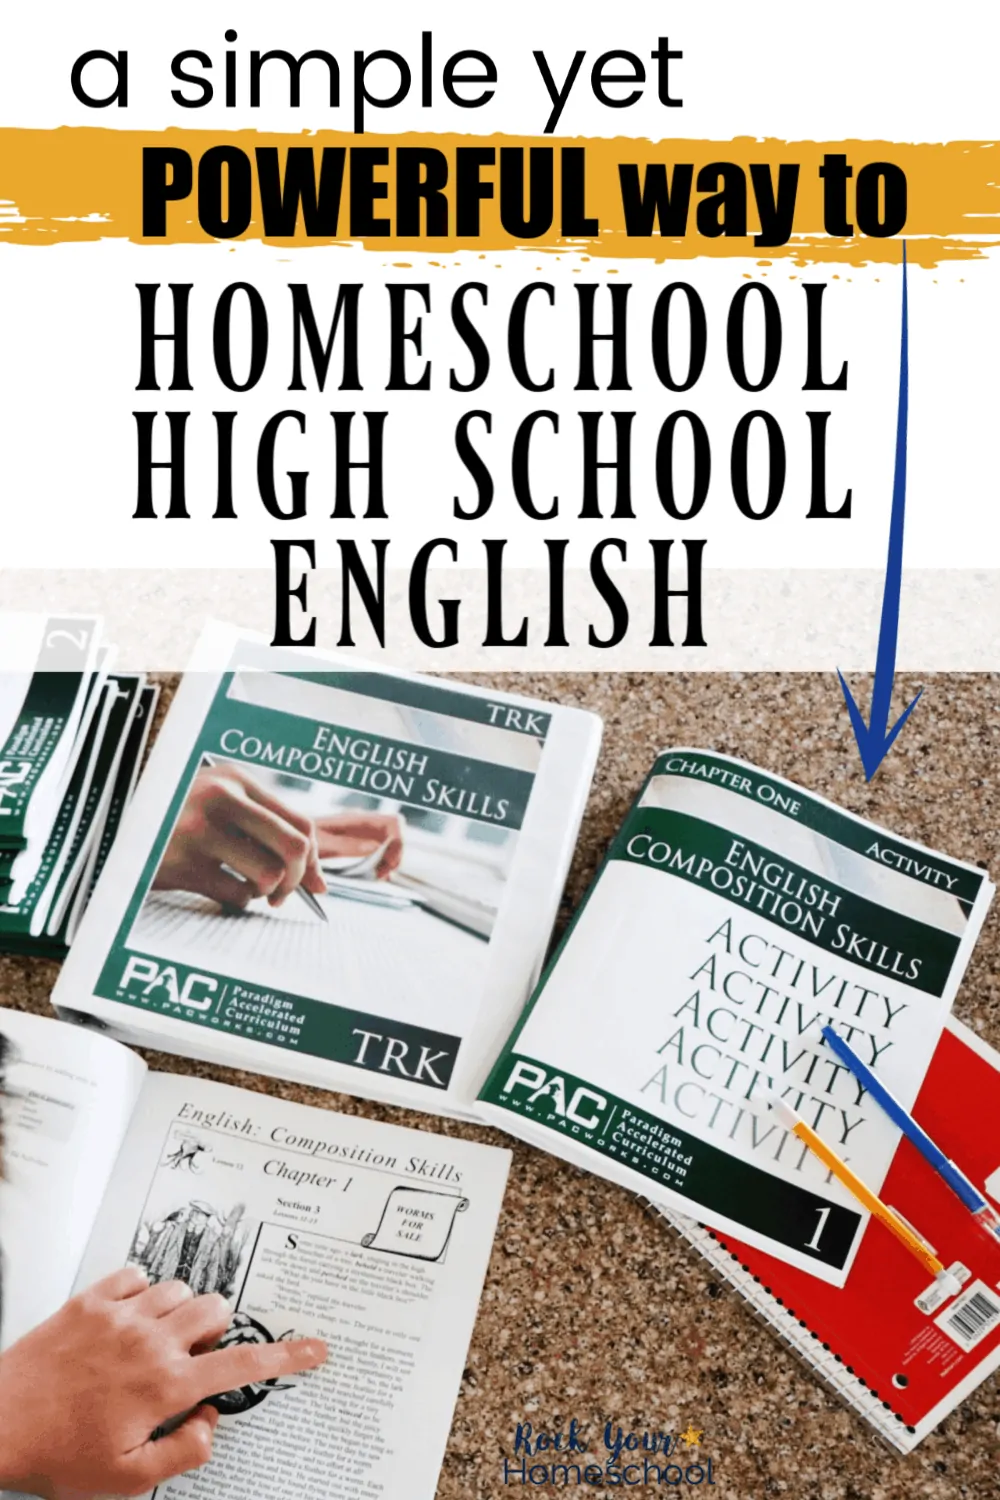 A Simple Yet Powerful Way to Homeschool High School English